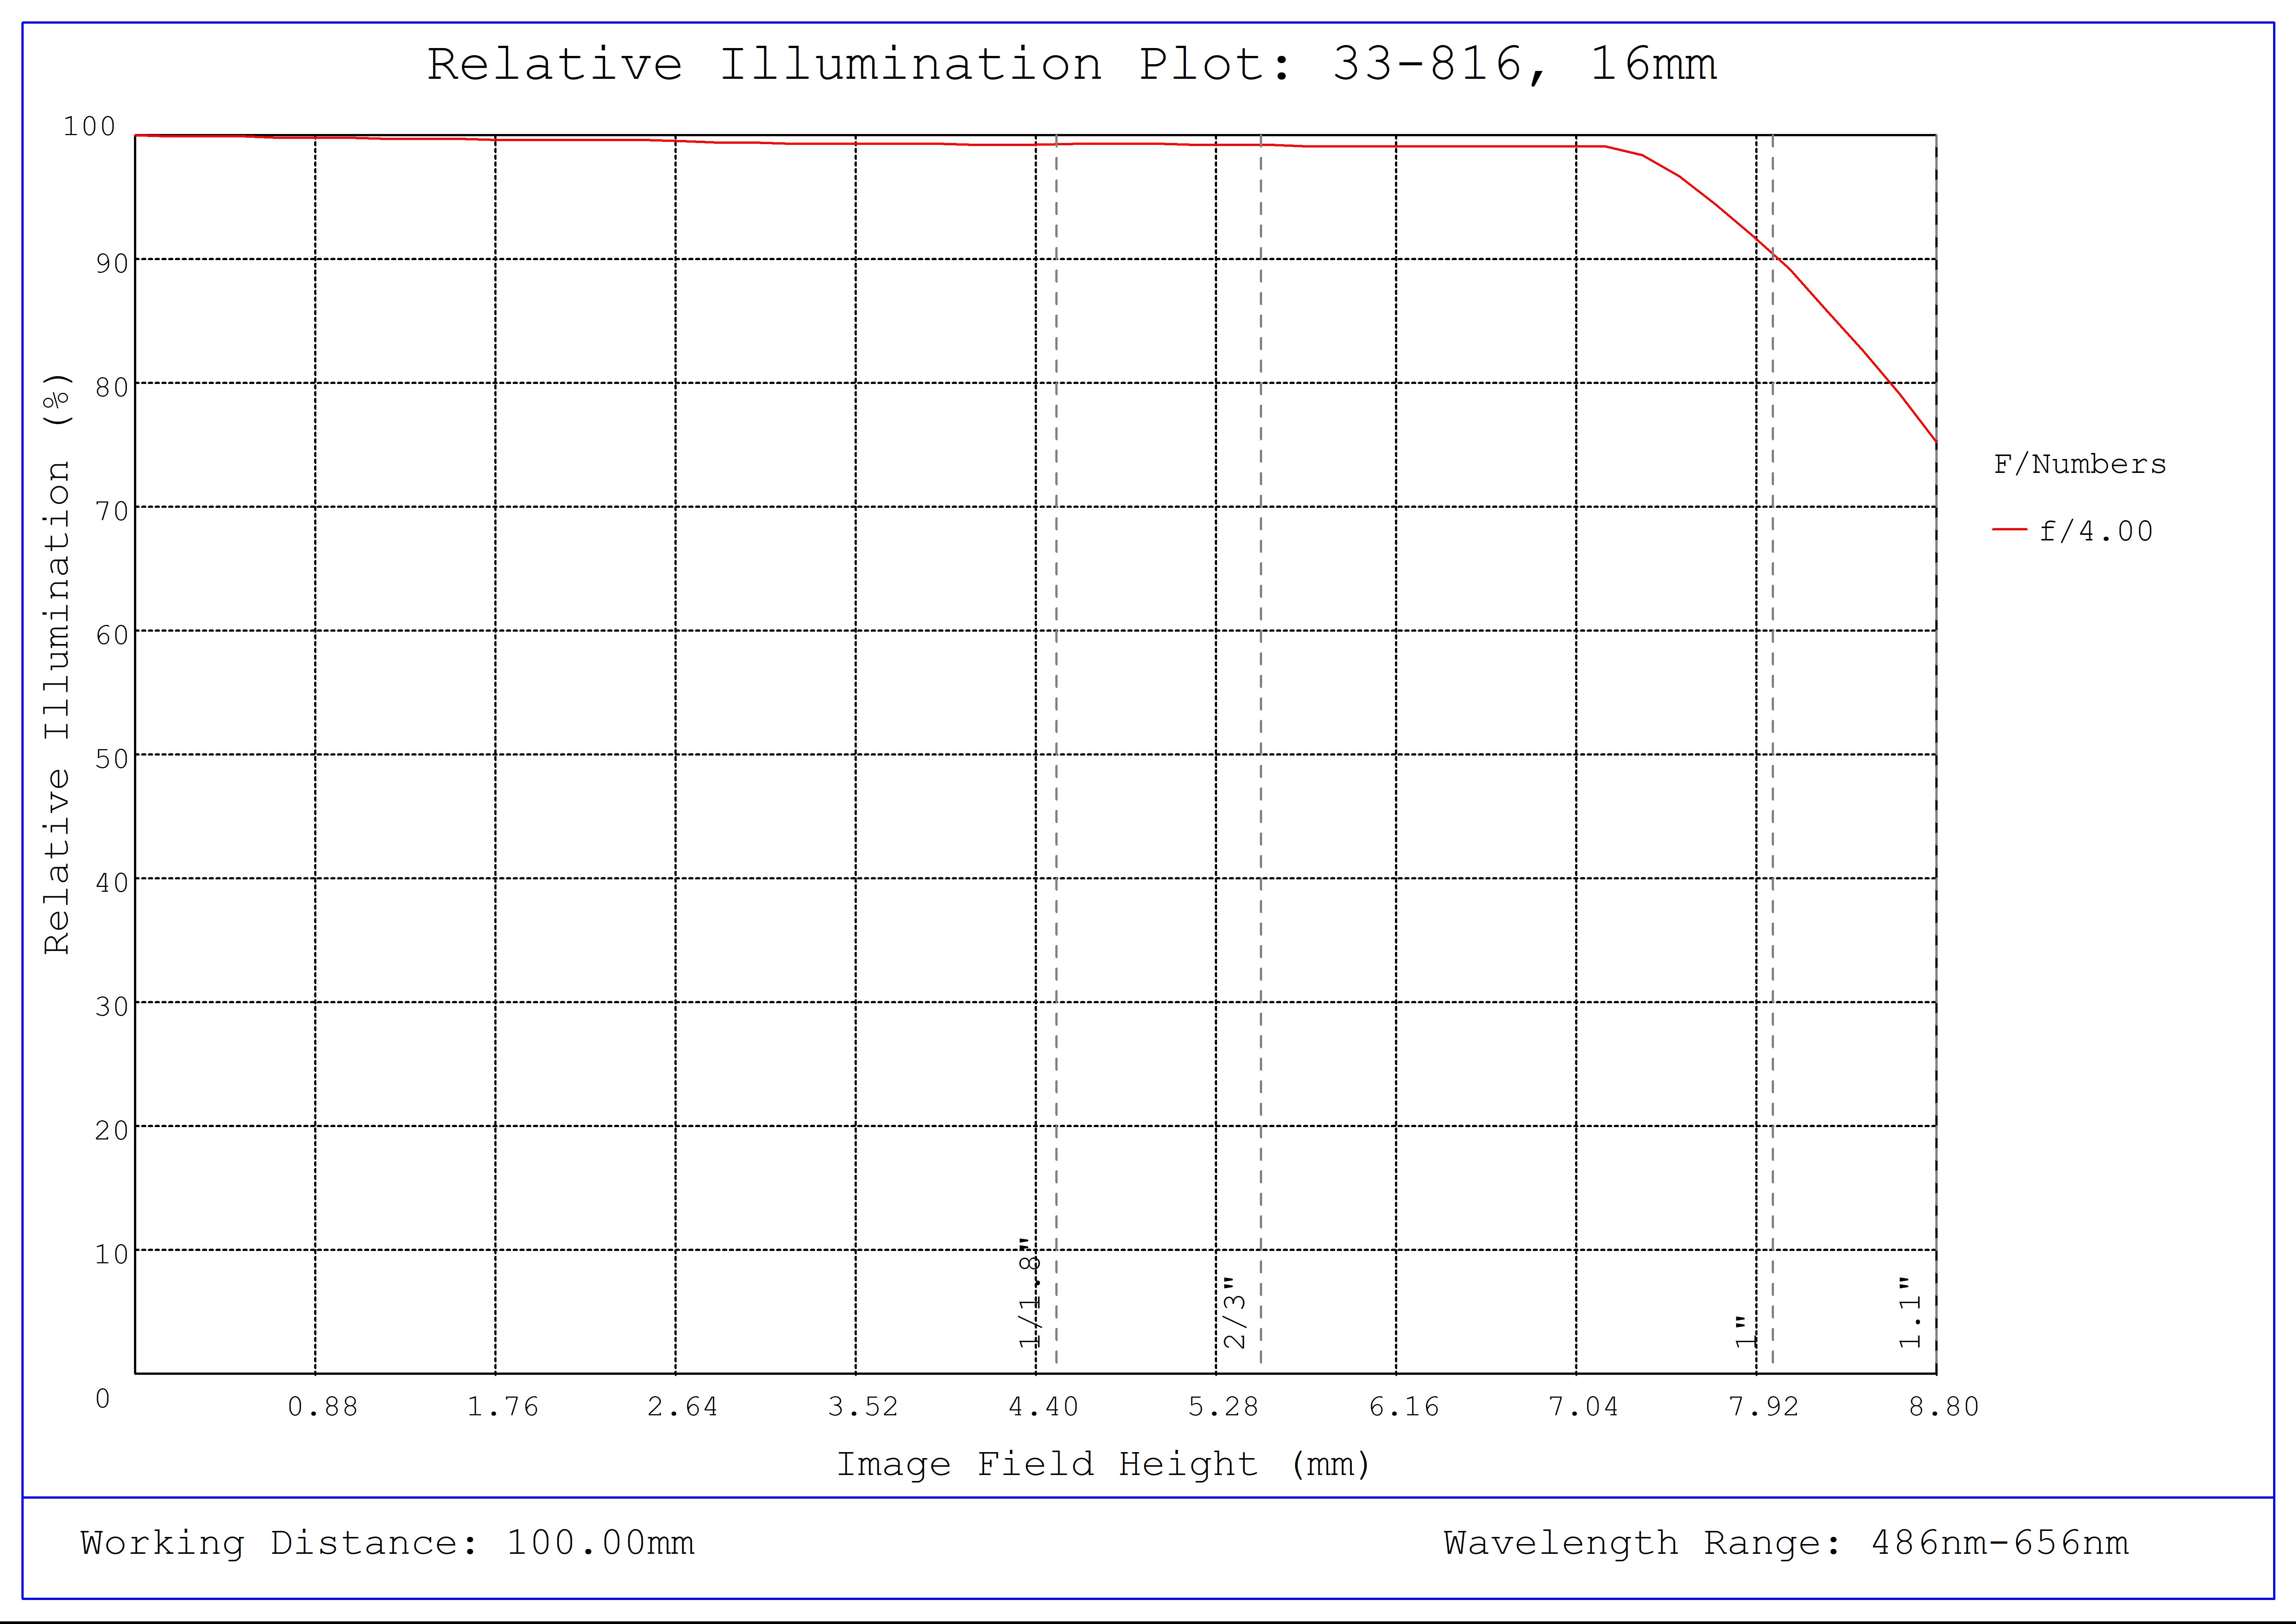 #33-816, 16mm f/4, HPi Series Fixed Focal Length Lens, Relative Illumination Plot